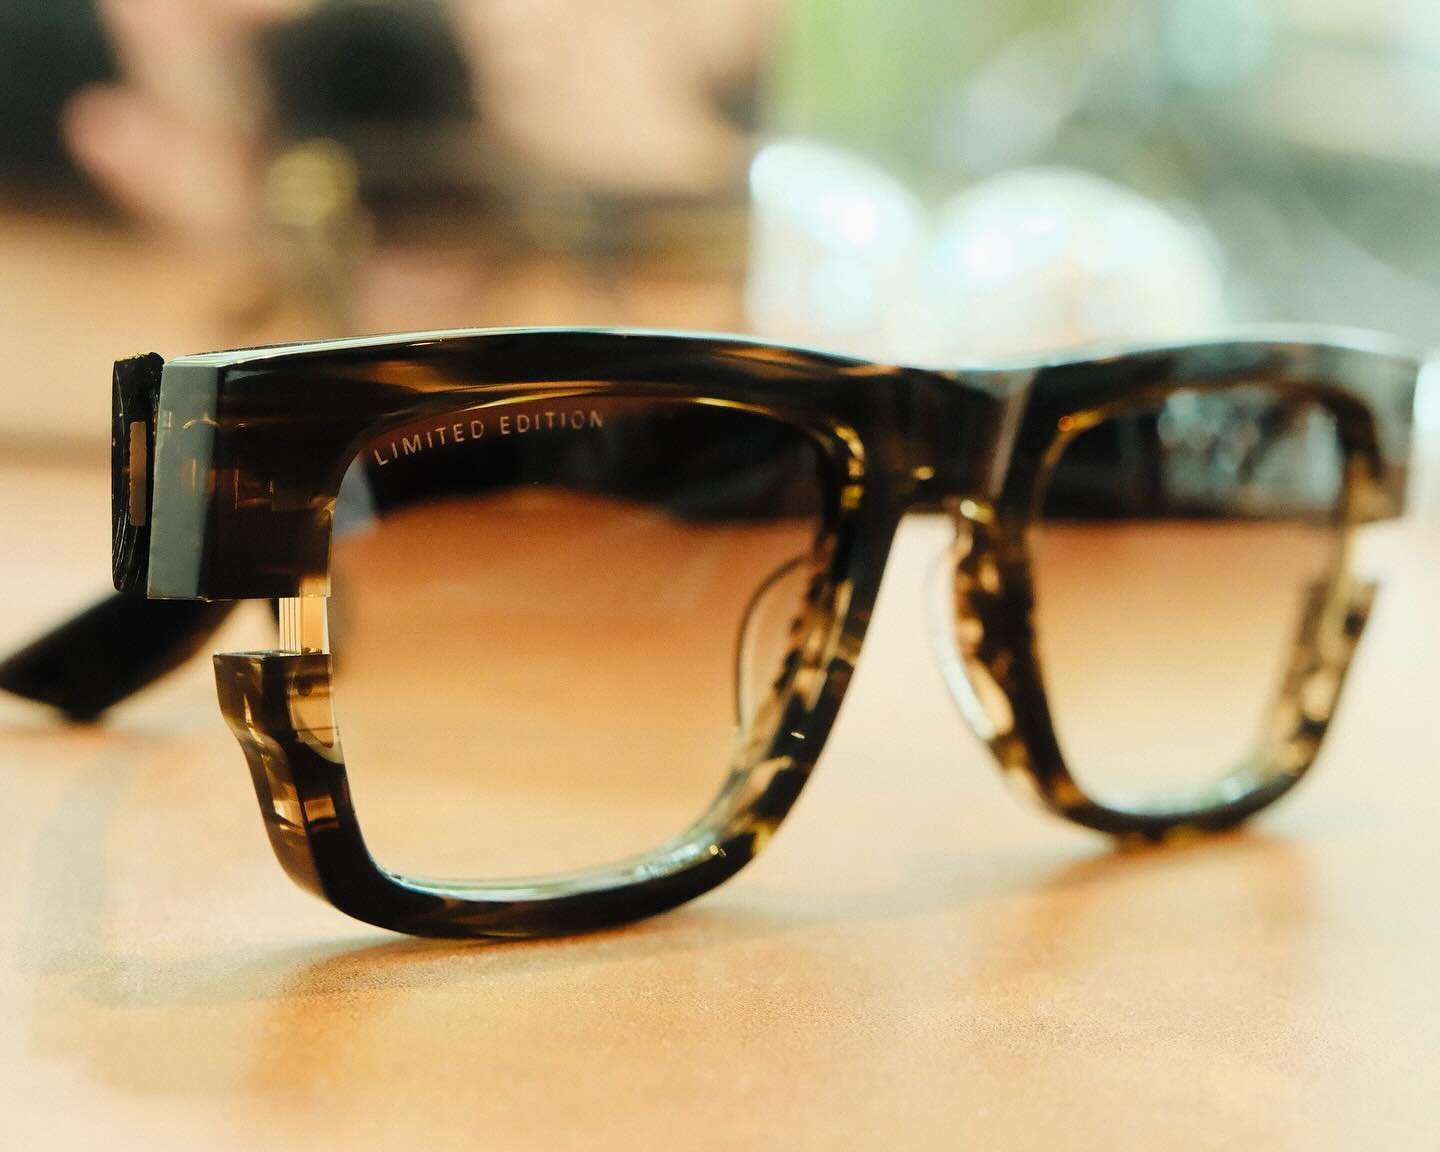 ☀️DITA ☀️ new Limited Edition from DITA Eyewaer @ditaeyewear 
.
.
.
.
.
#d&uuml;sseldorf #k&ouml;ln #hesseundholl&auml;nder #ehrenfeld  #flingern #glasses #augenoptik #styleinspo #hesseundhollaender #sunglasses #optician #style #inspo